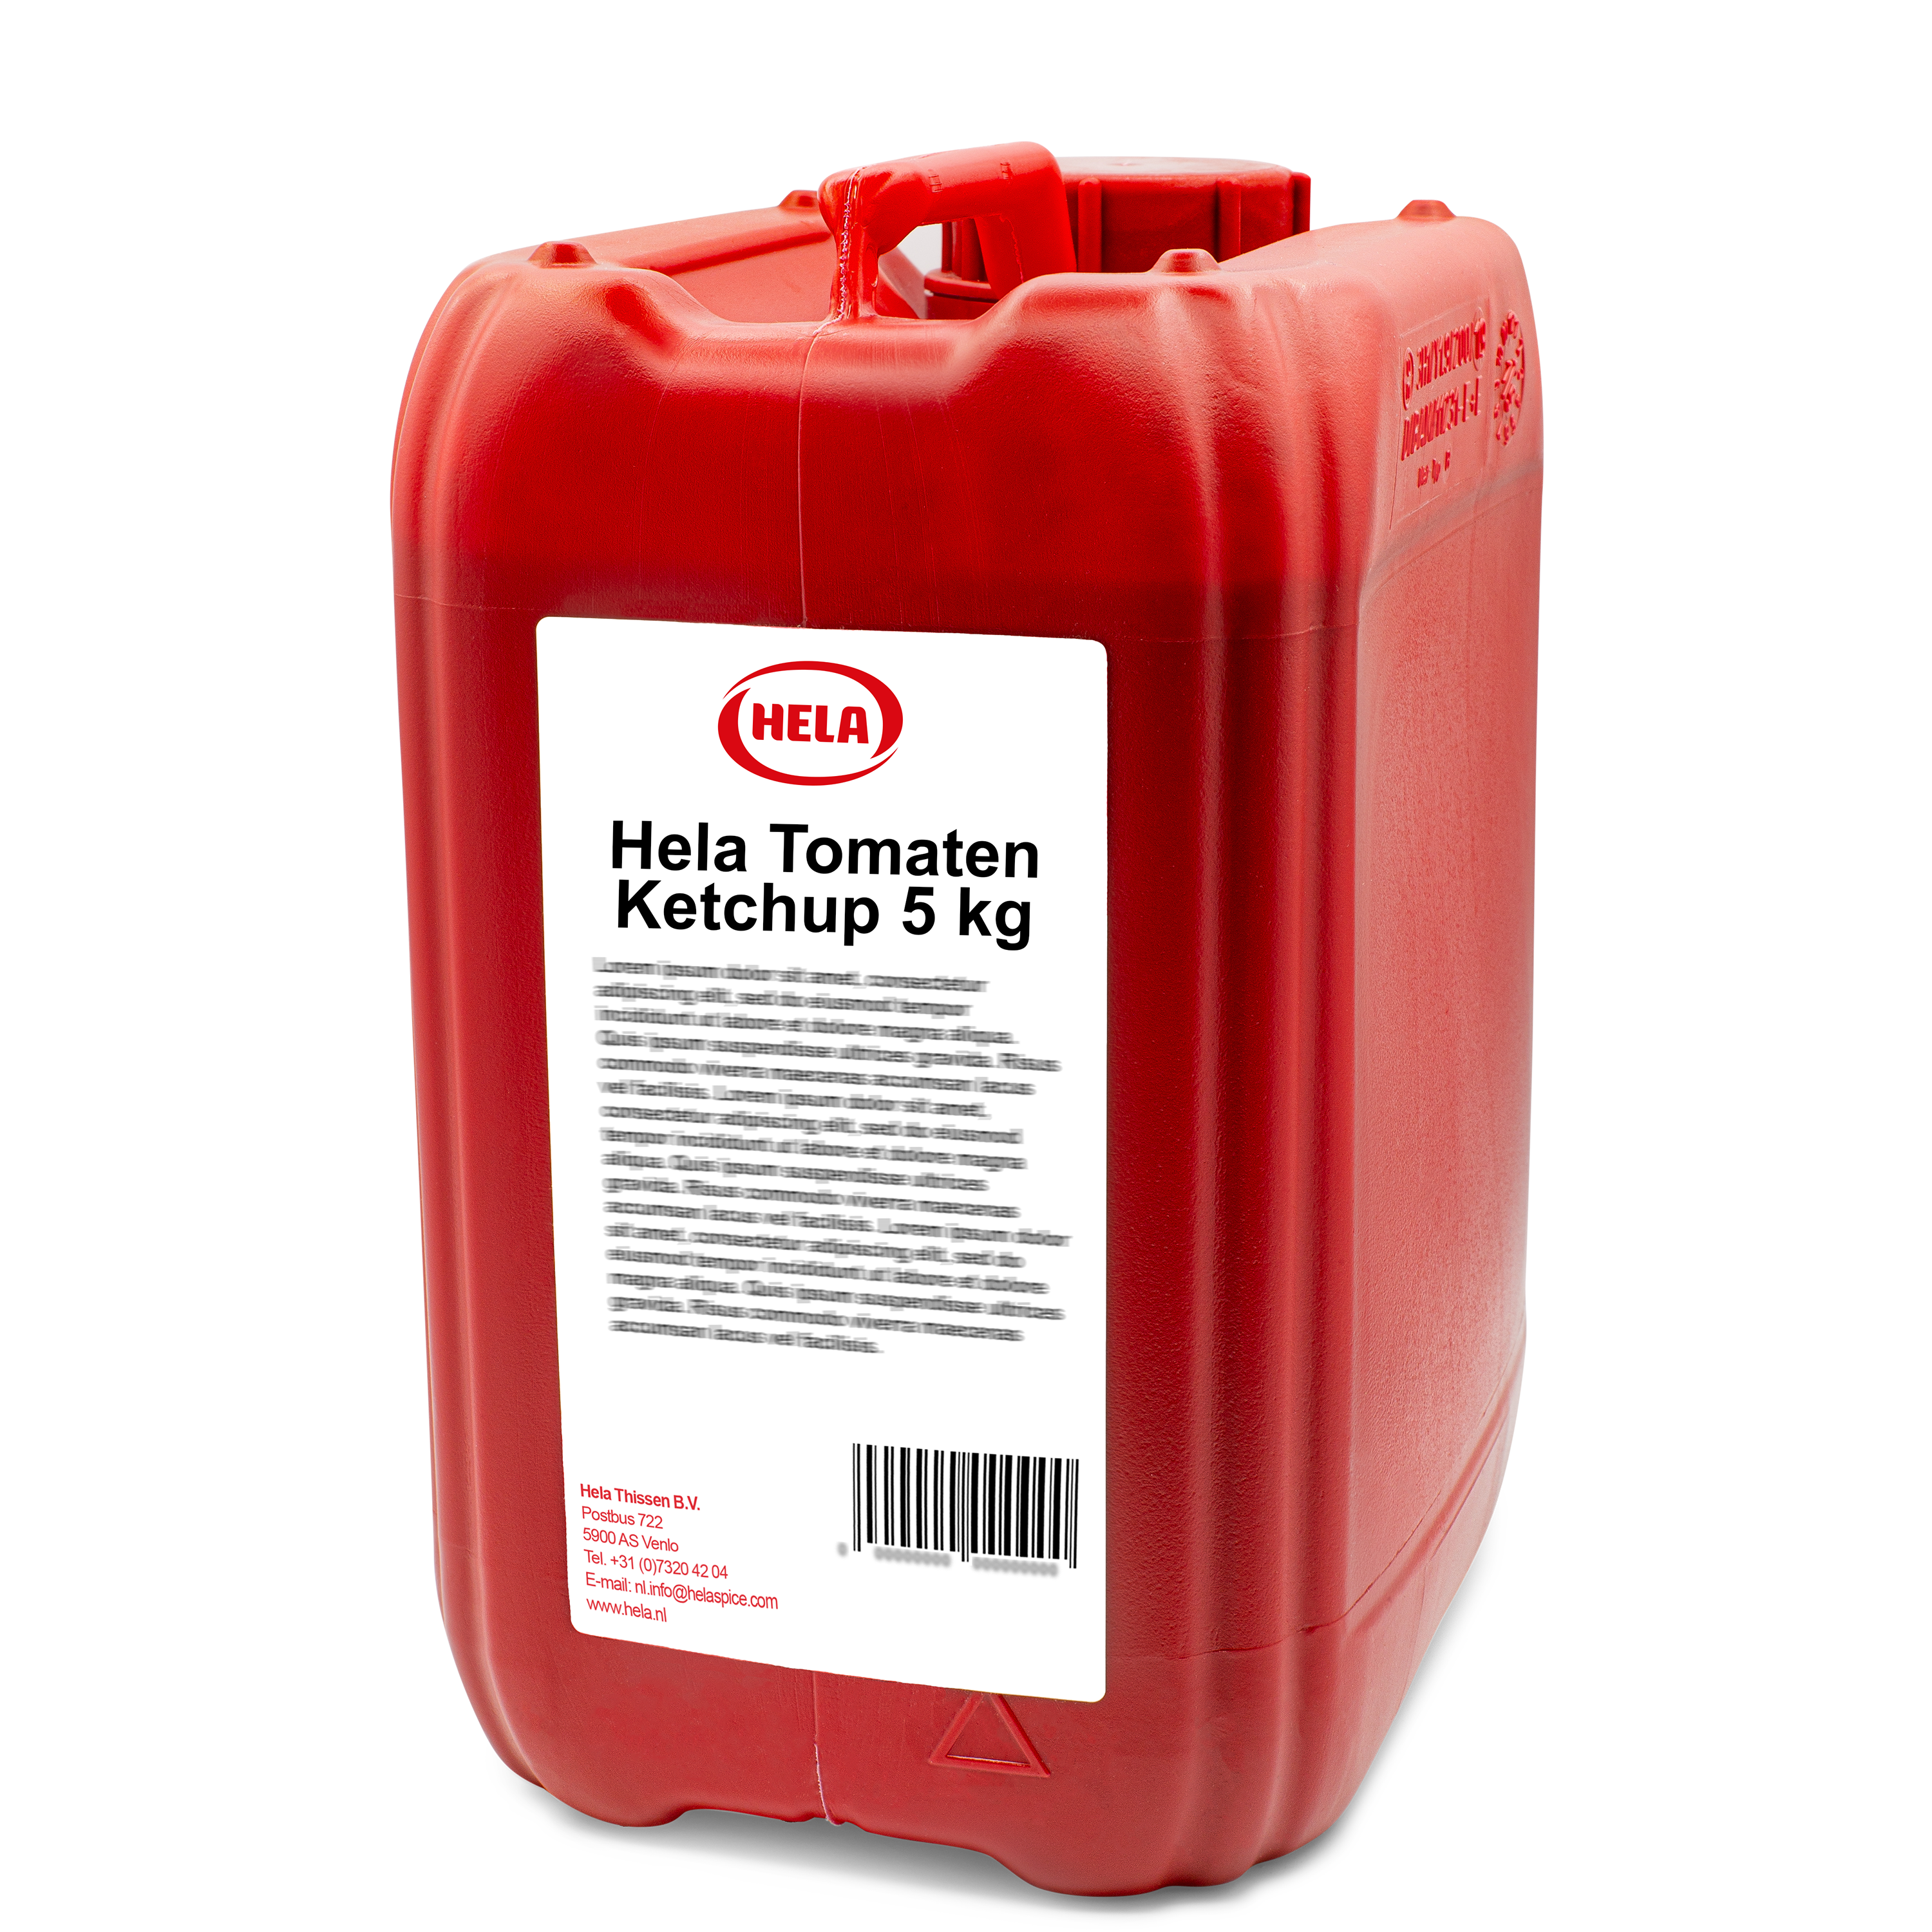 hela-tomaten-ketchup-5-kg.png